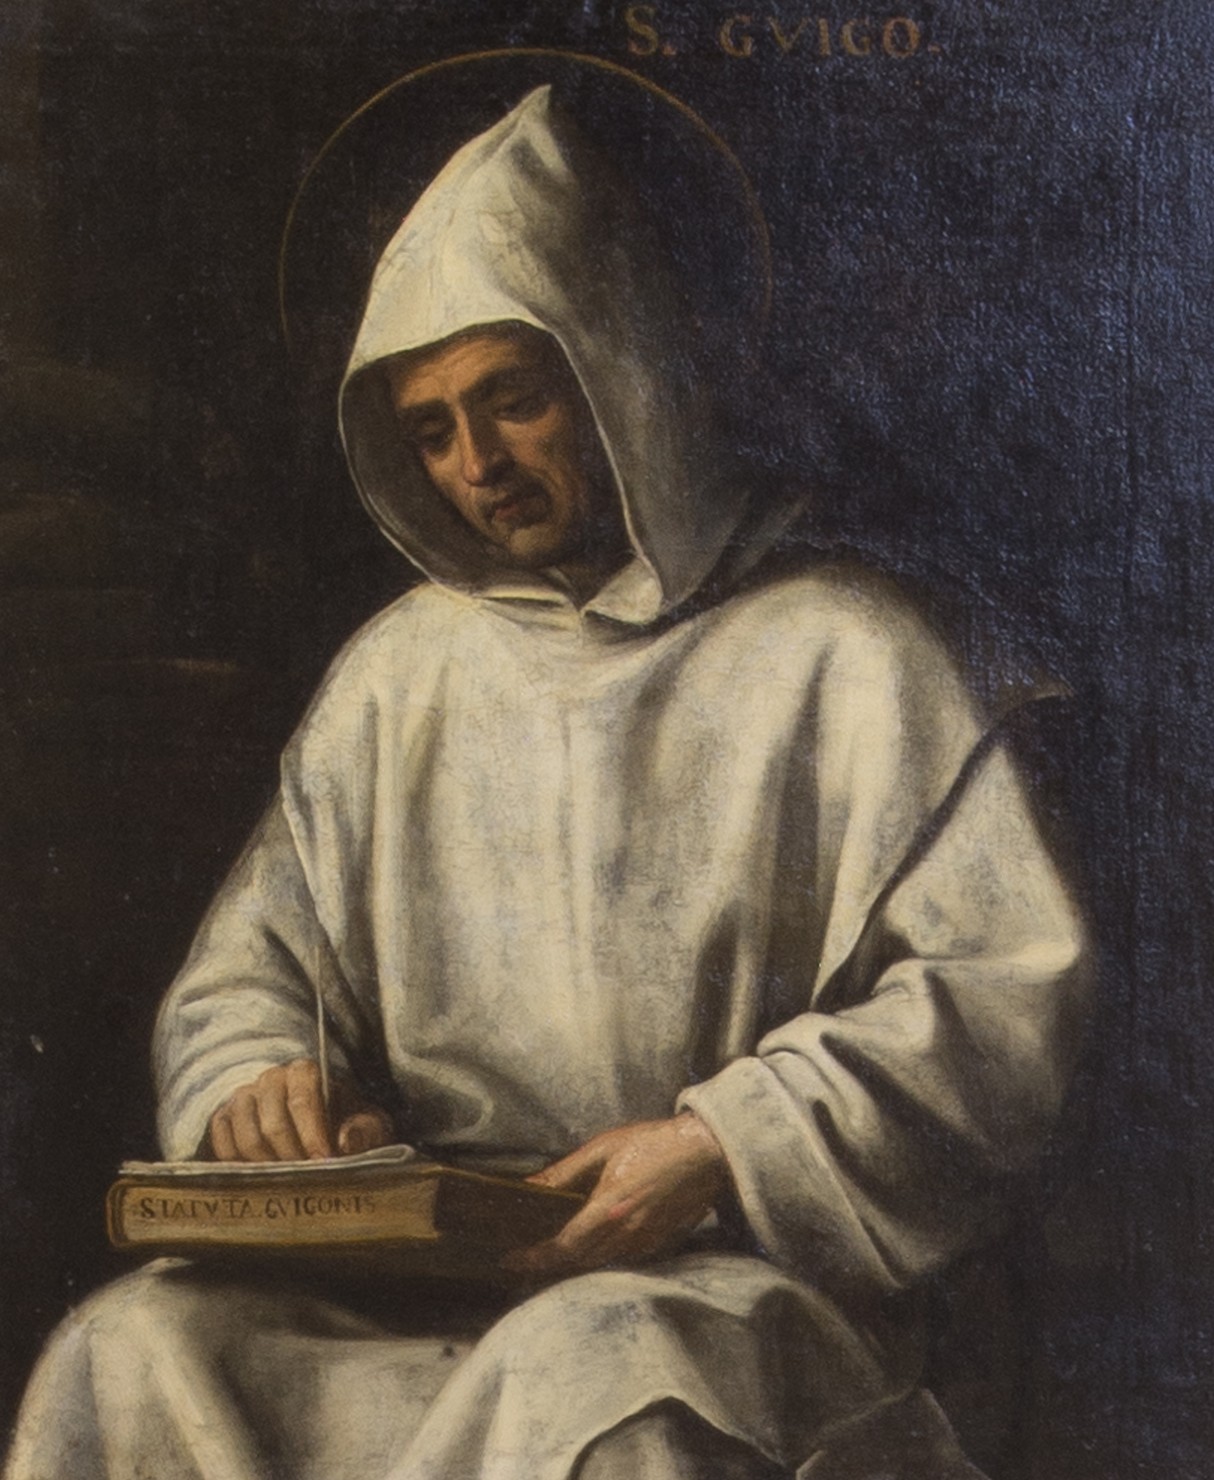 San Guigo I (dipinto, opera isolata) di Vermiglio Giuseppe (bottega) (prima metà sec. XVII)